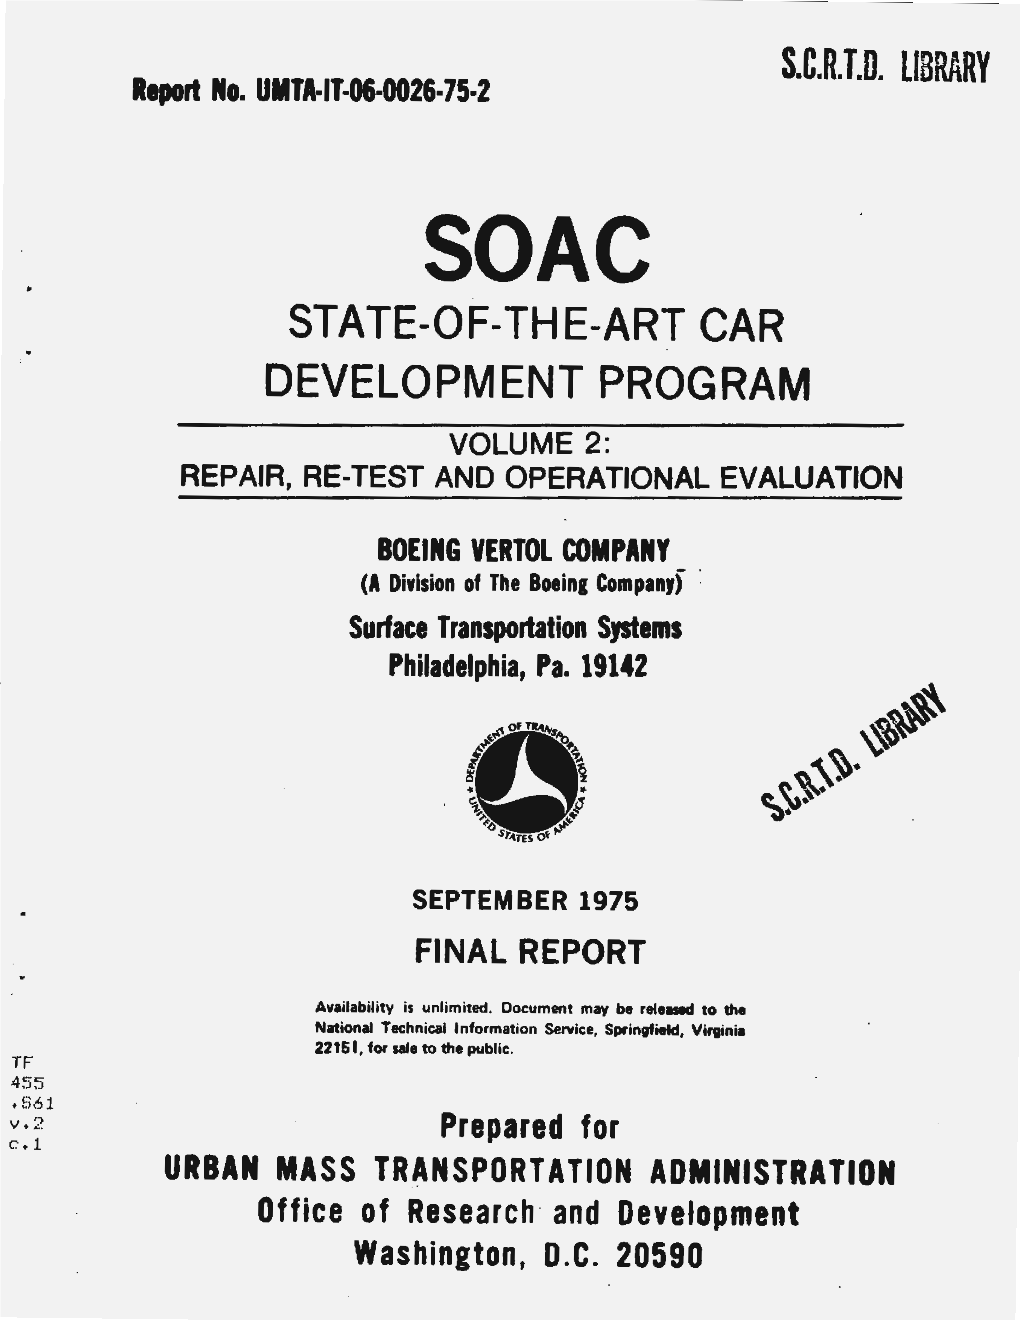 1975 Final Report